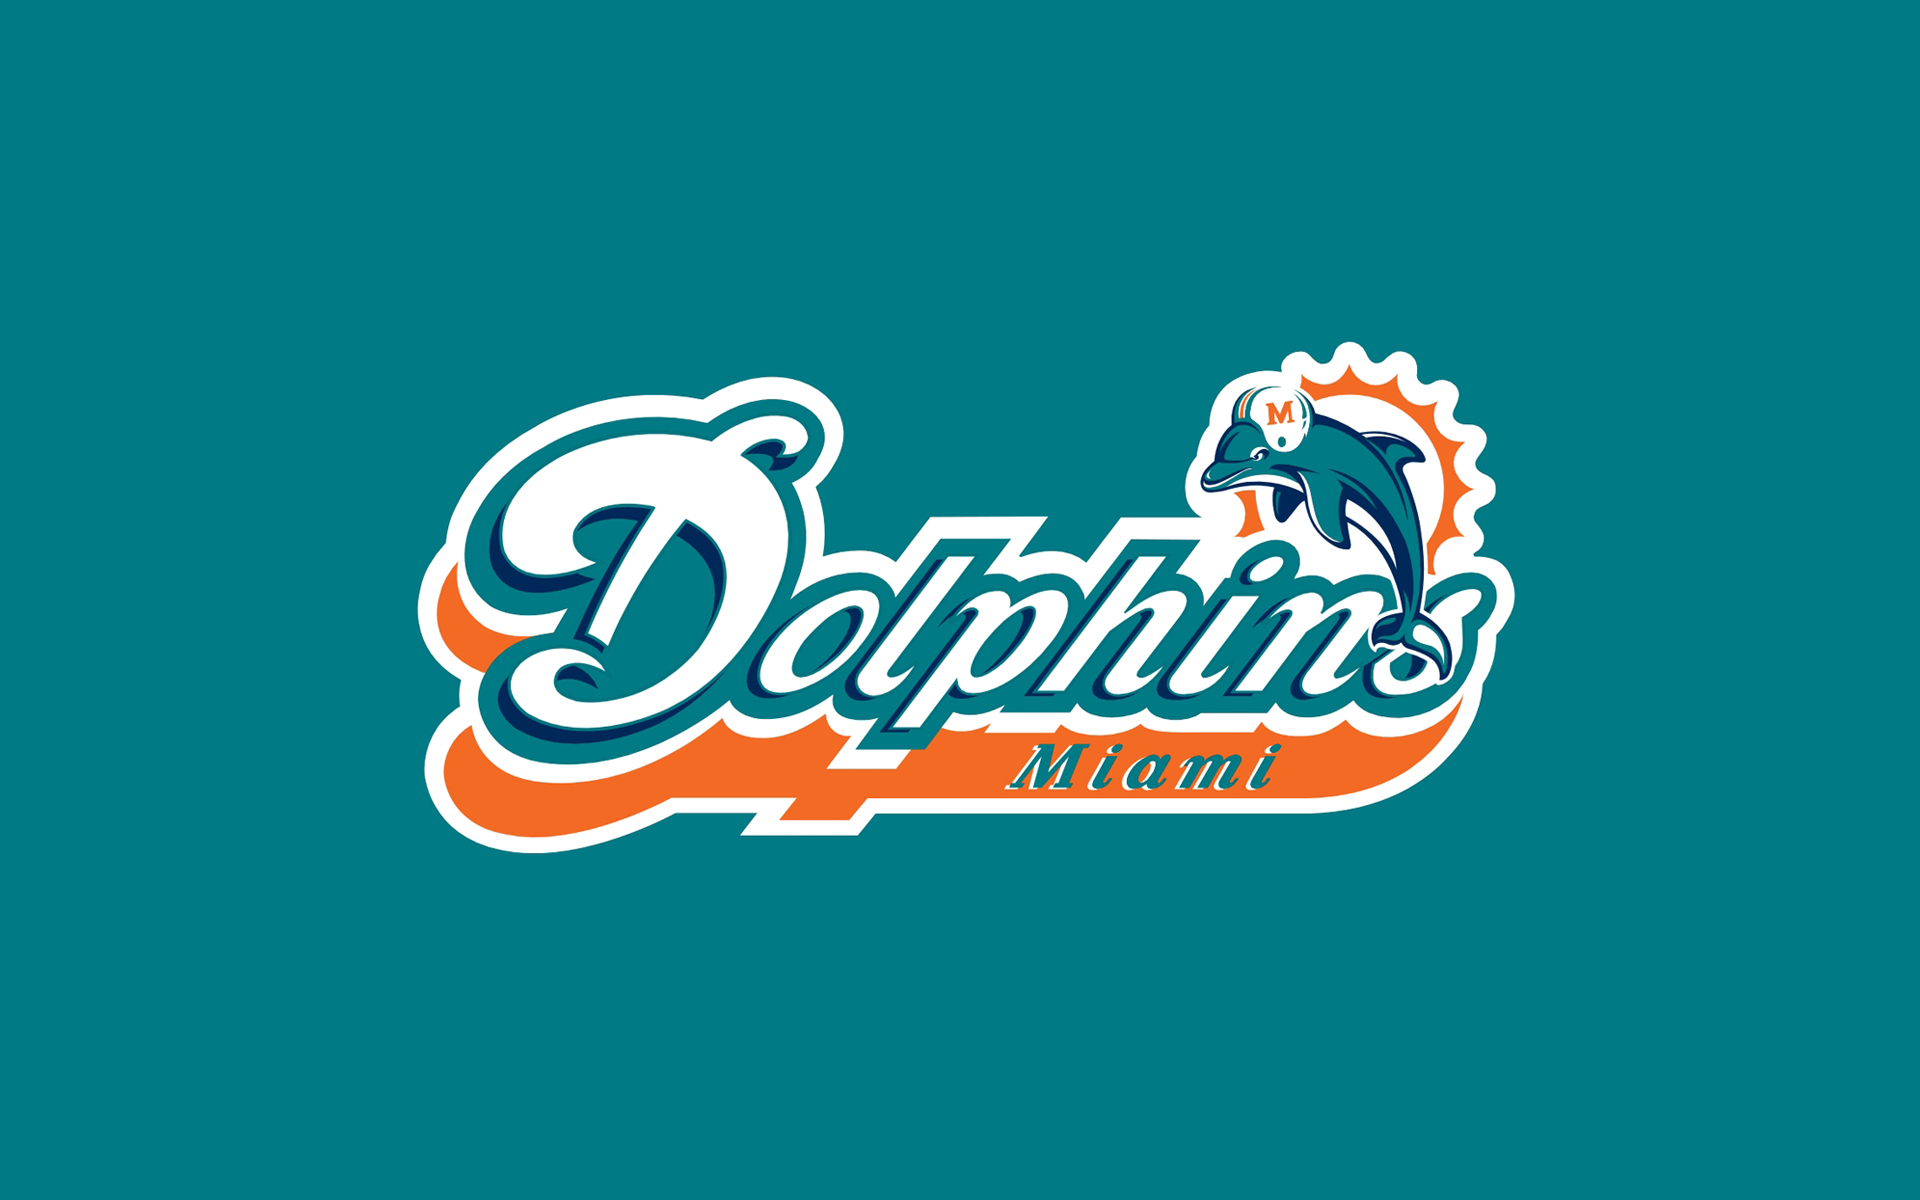 The Miami Dolphins HD Wallpaper 1080p Desktop